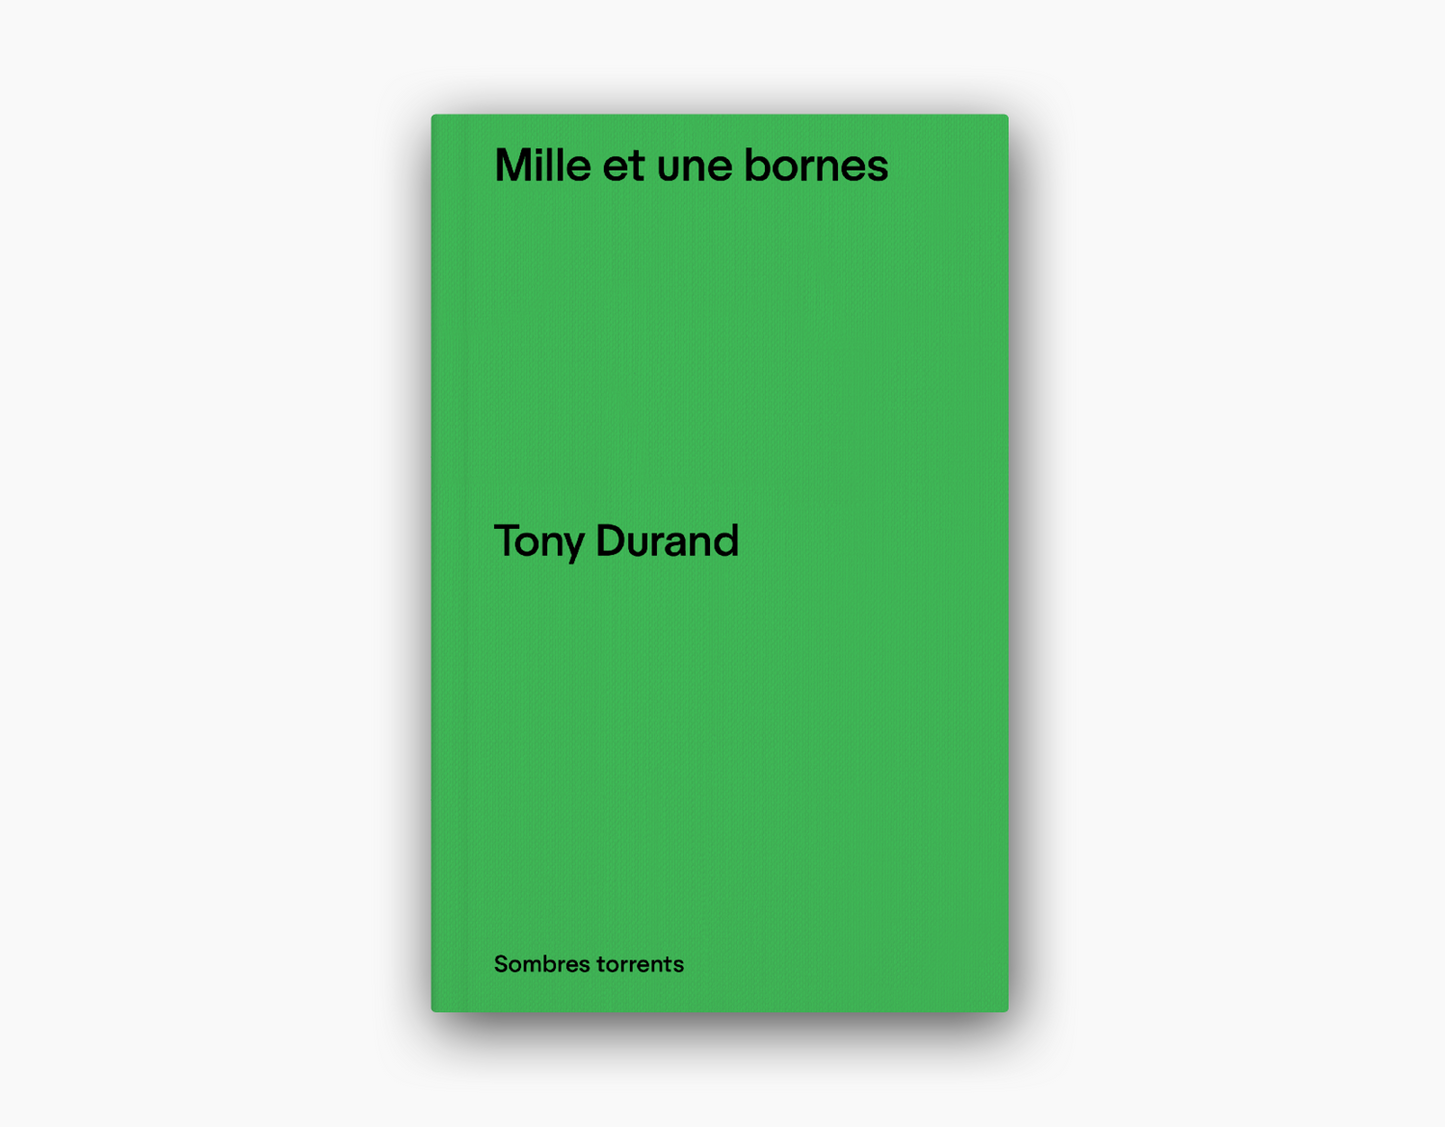 Tony Durand - Mille et une bornes